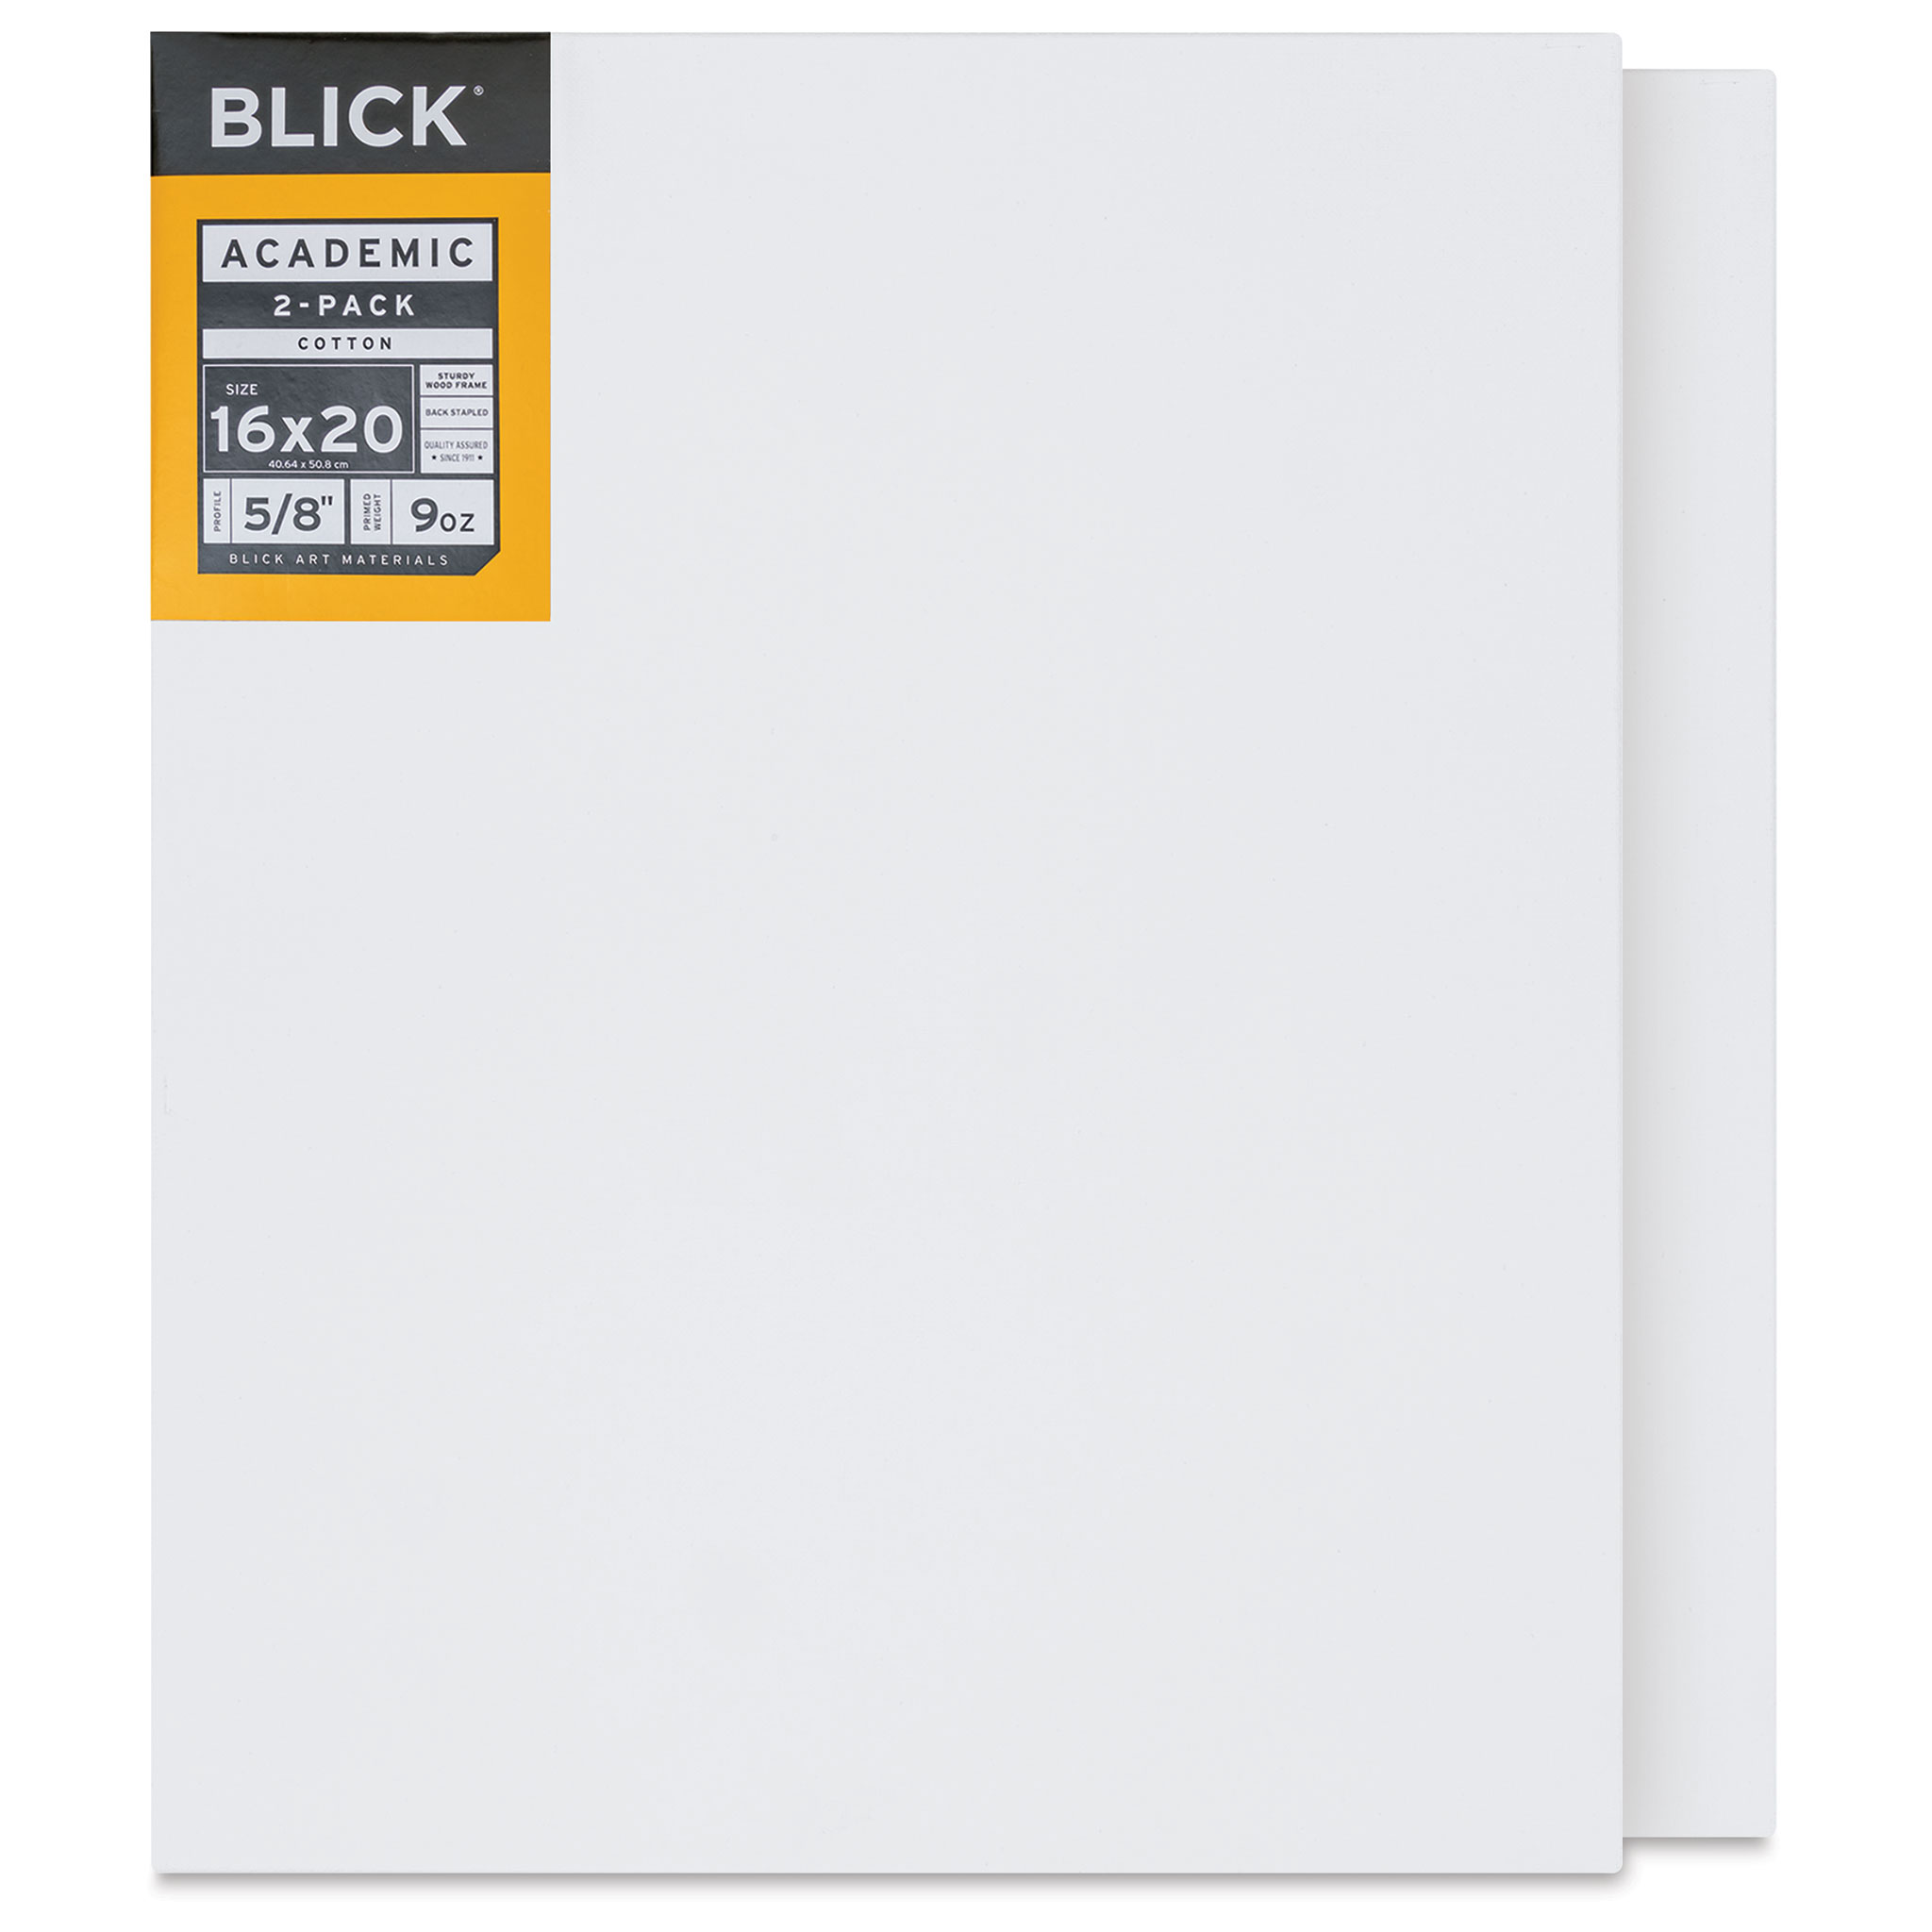 Blick Super Value Canvas Pack - 9 x 12, Pkg of 8